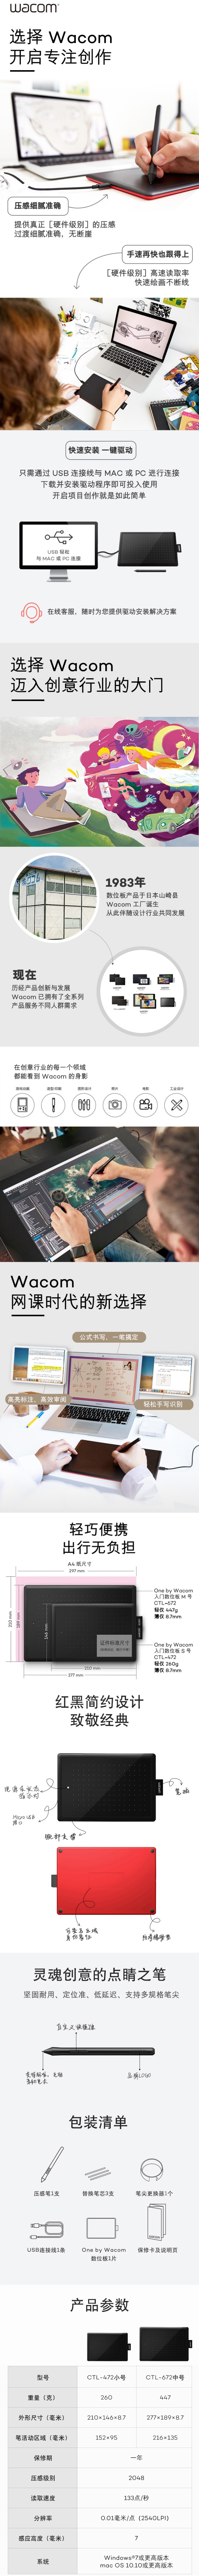 【WacomCTL-472_K1-FX】Wacom和冠数位板 手绘板 手写板 写字板 绘画板 网课 .jpg